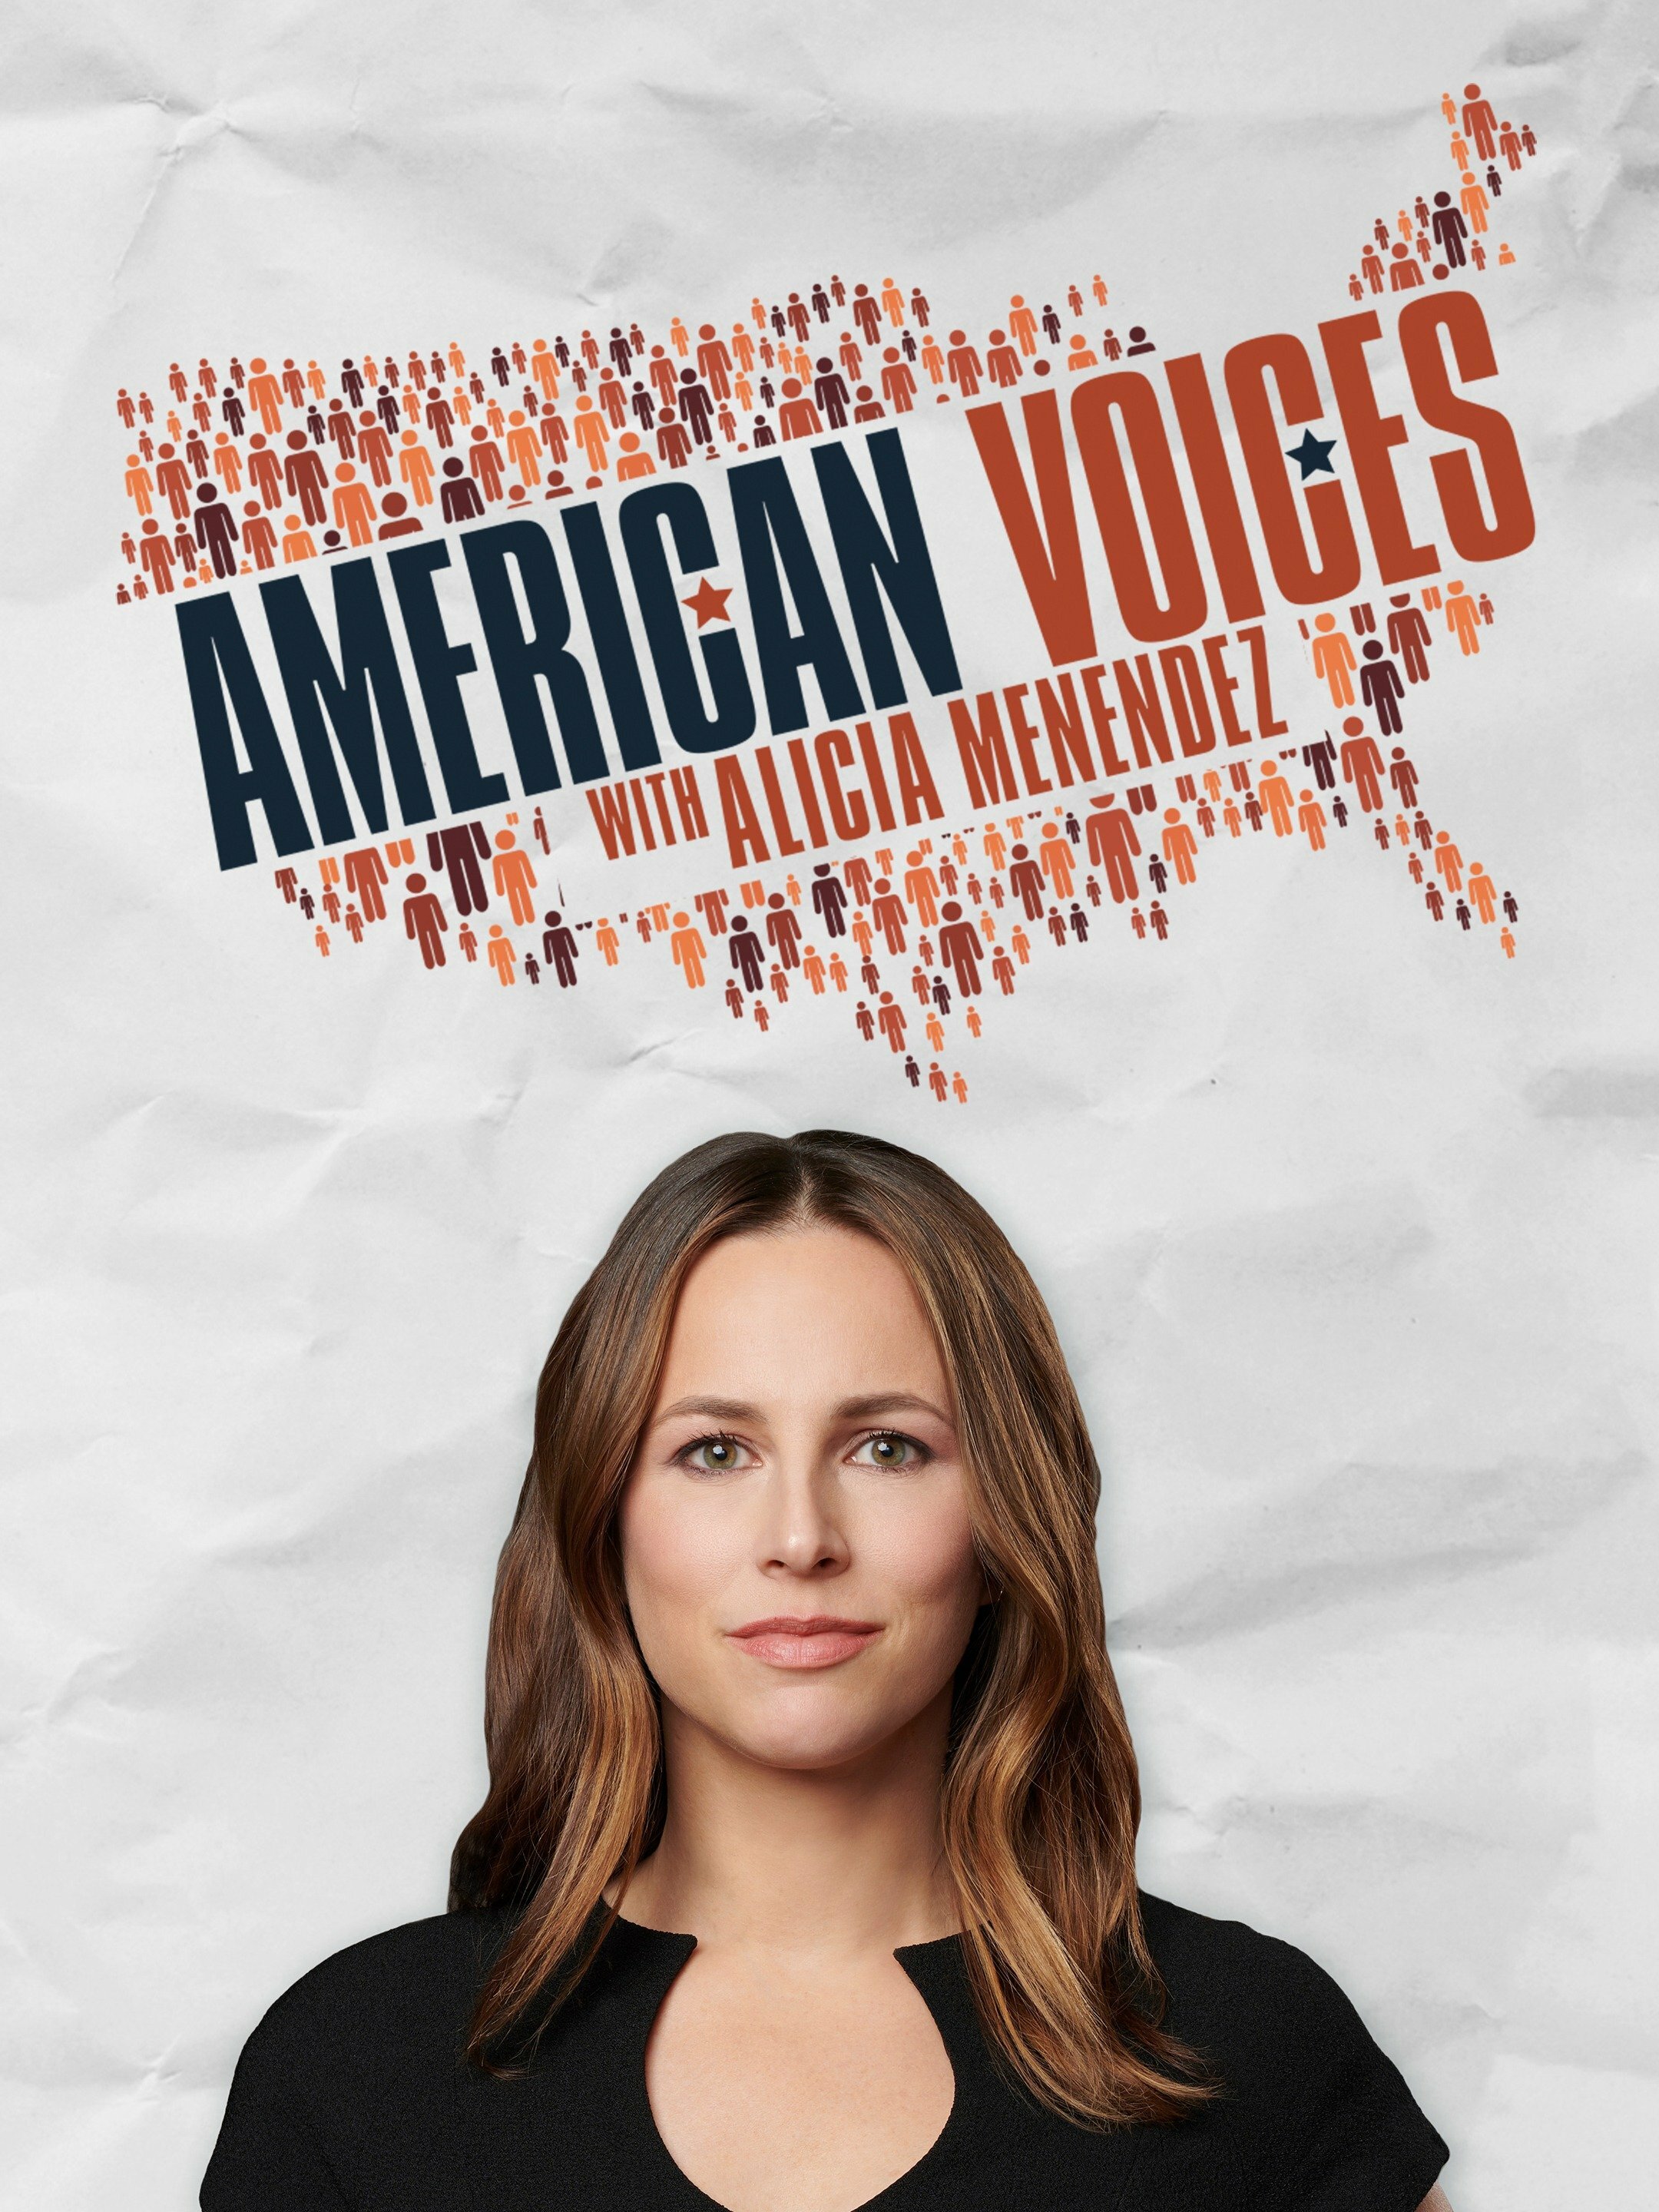 American Voices with Alicia Menendez ne zaman